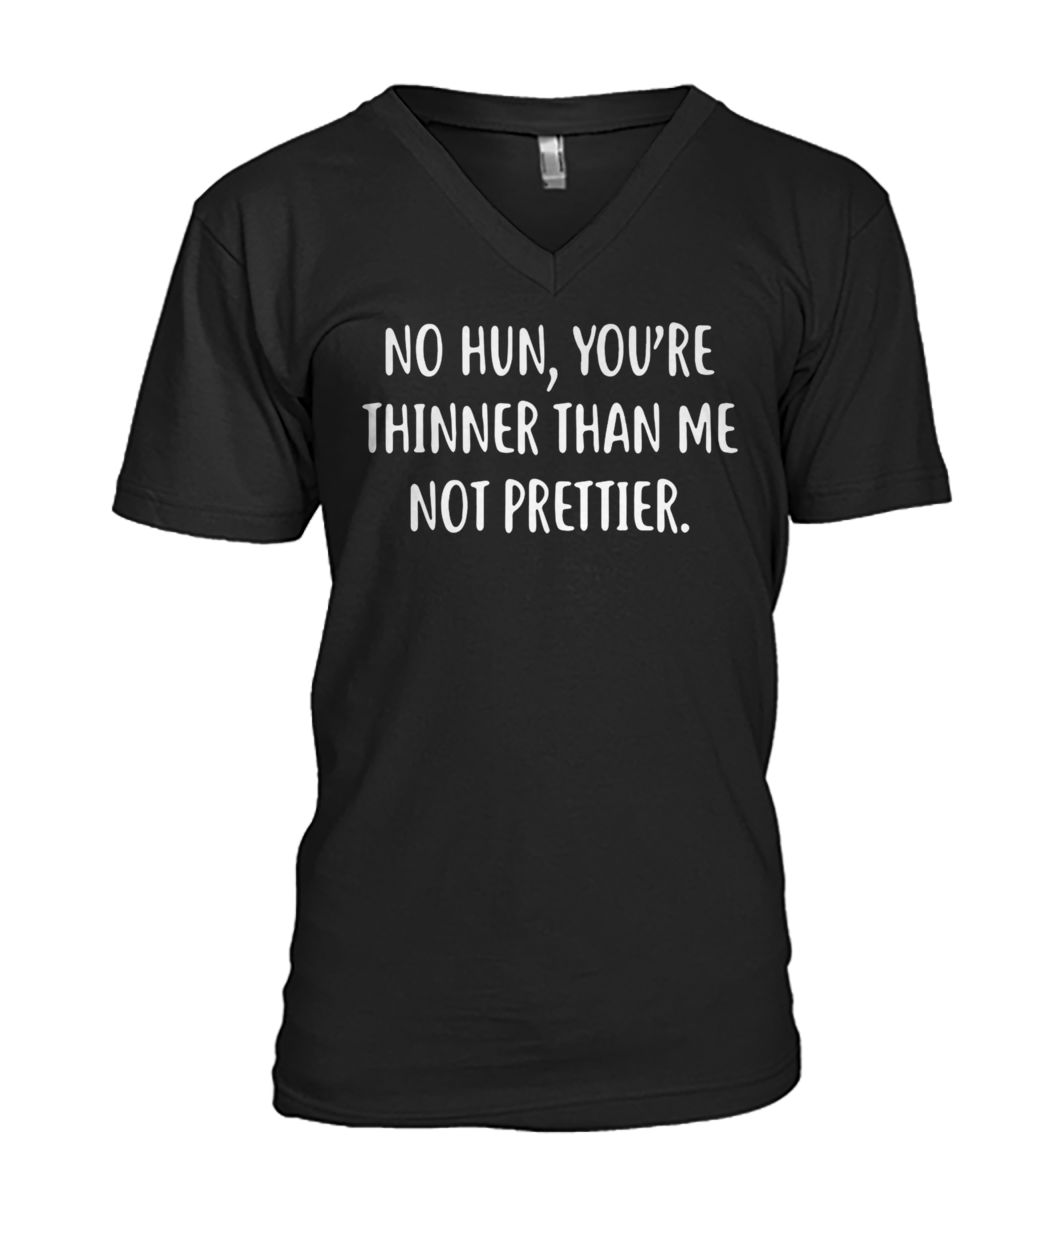 No hun you're thinner than me not prettier mens v-neck